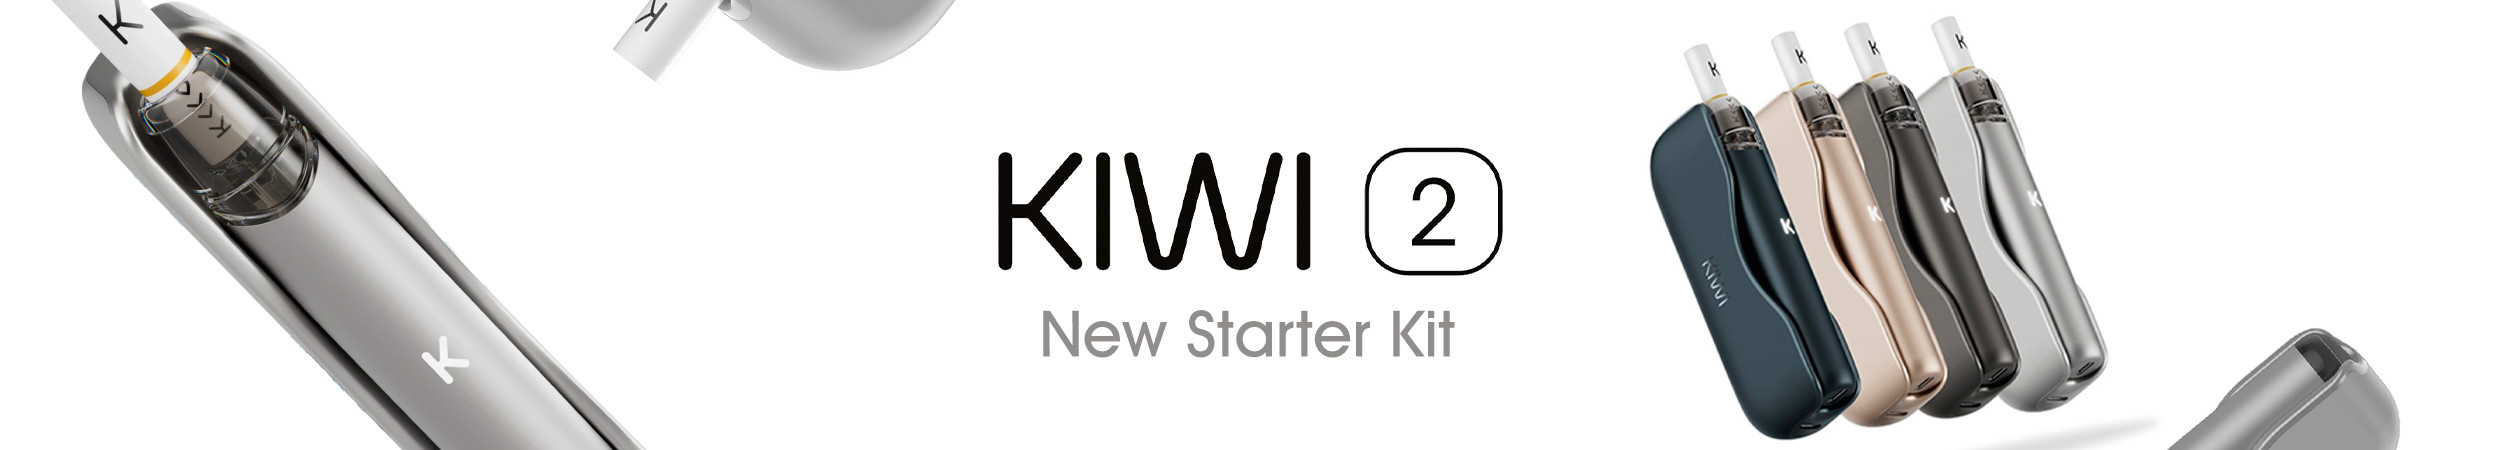 KIWI 2 NEW STARTER KIT